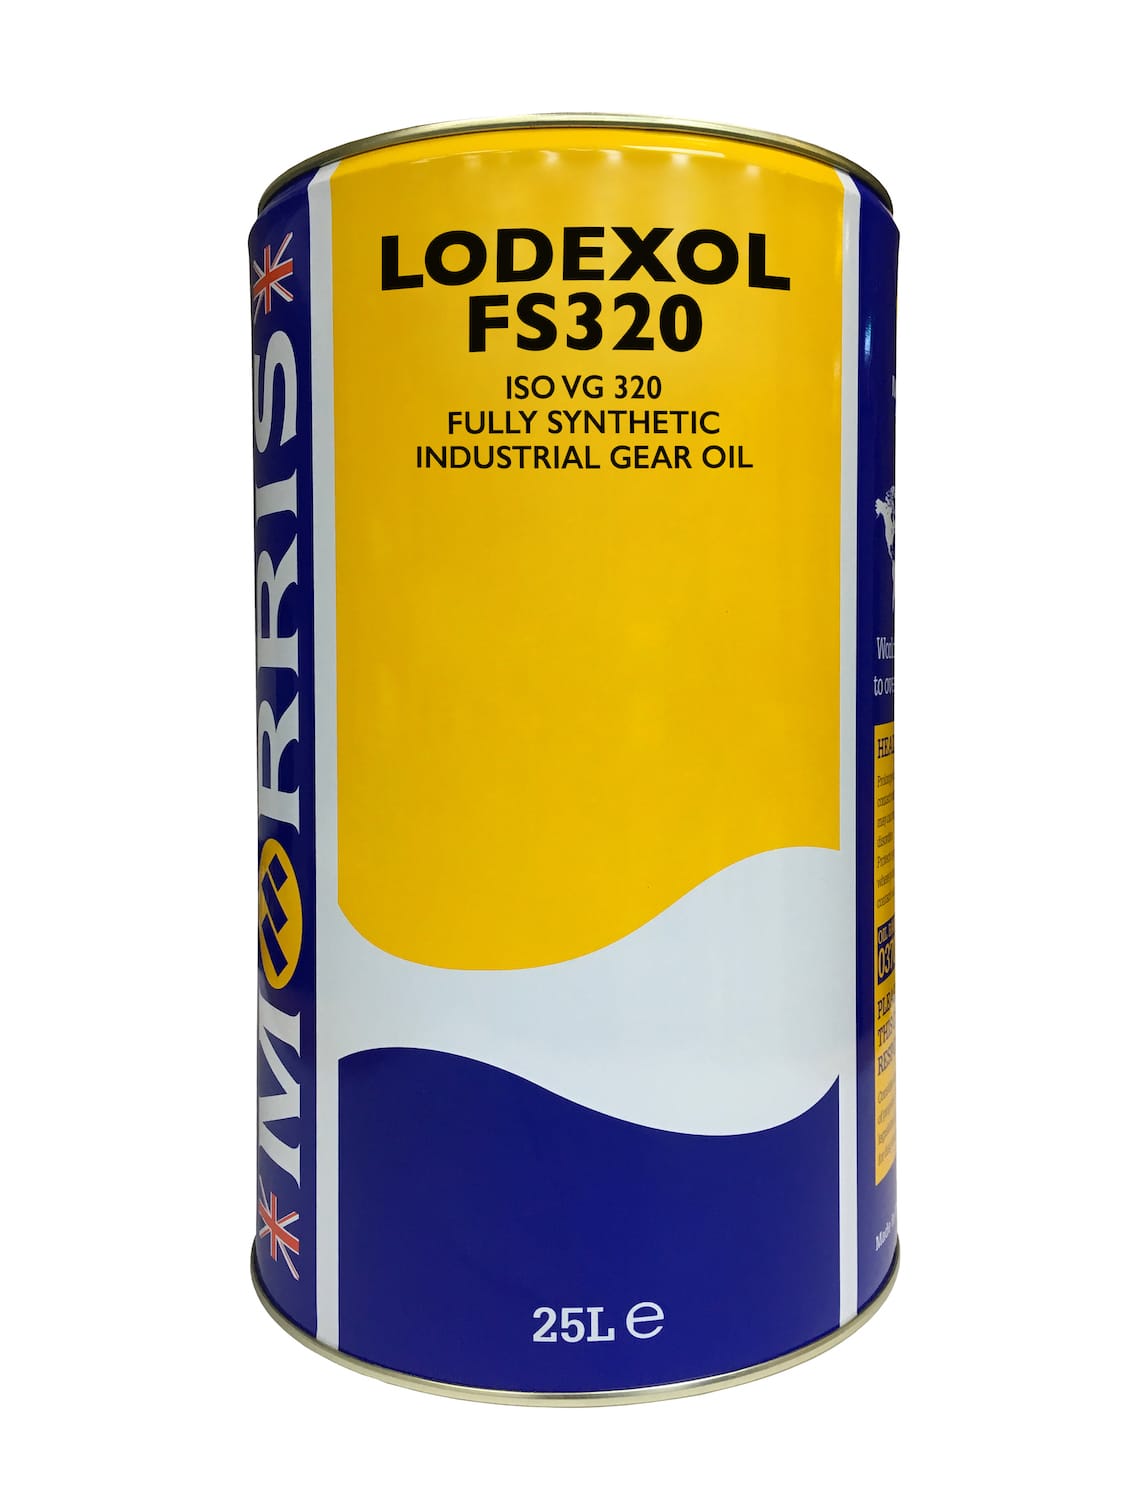 Lodexol FS 320